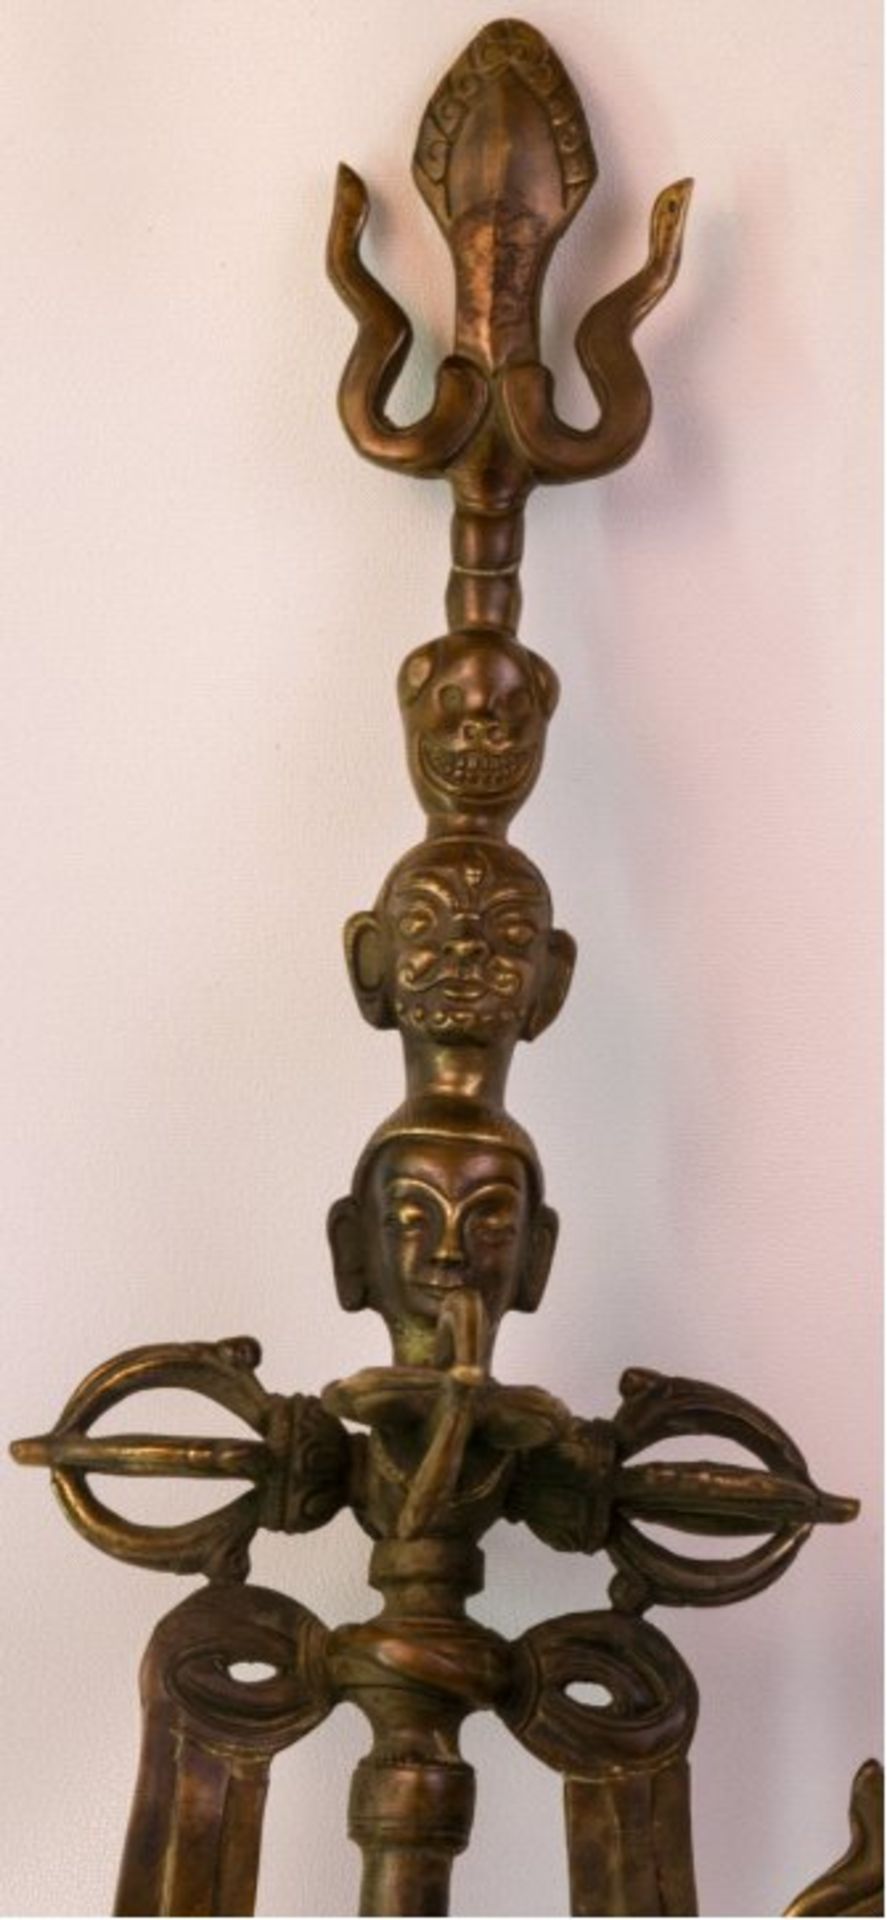 Magischer Zepterstab (Khatvanga).Tibet oder Mongolei 18./19. Jh. Bronzestab, symbolisiertStrafgewalt - Bild 4 aus 5